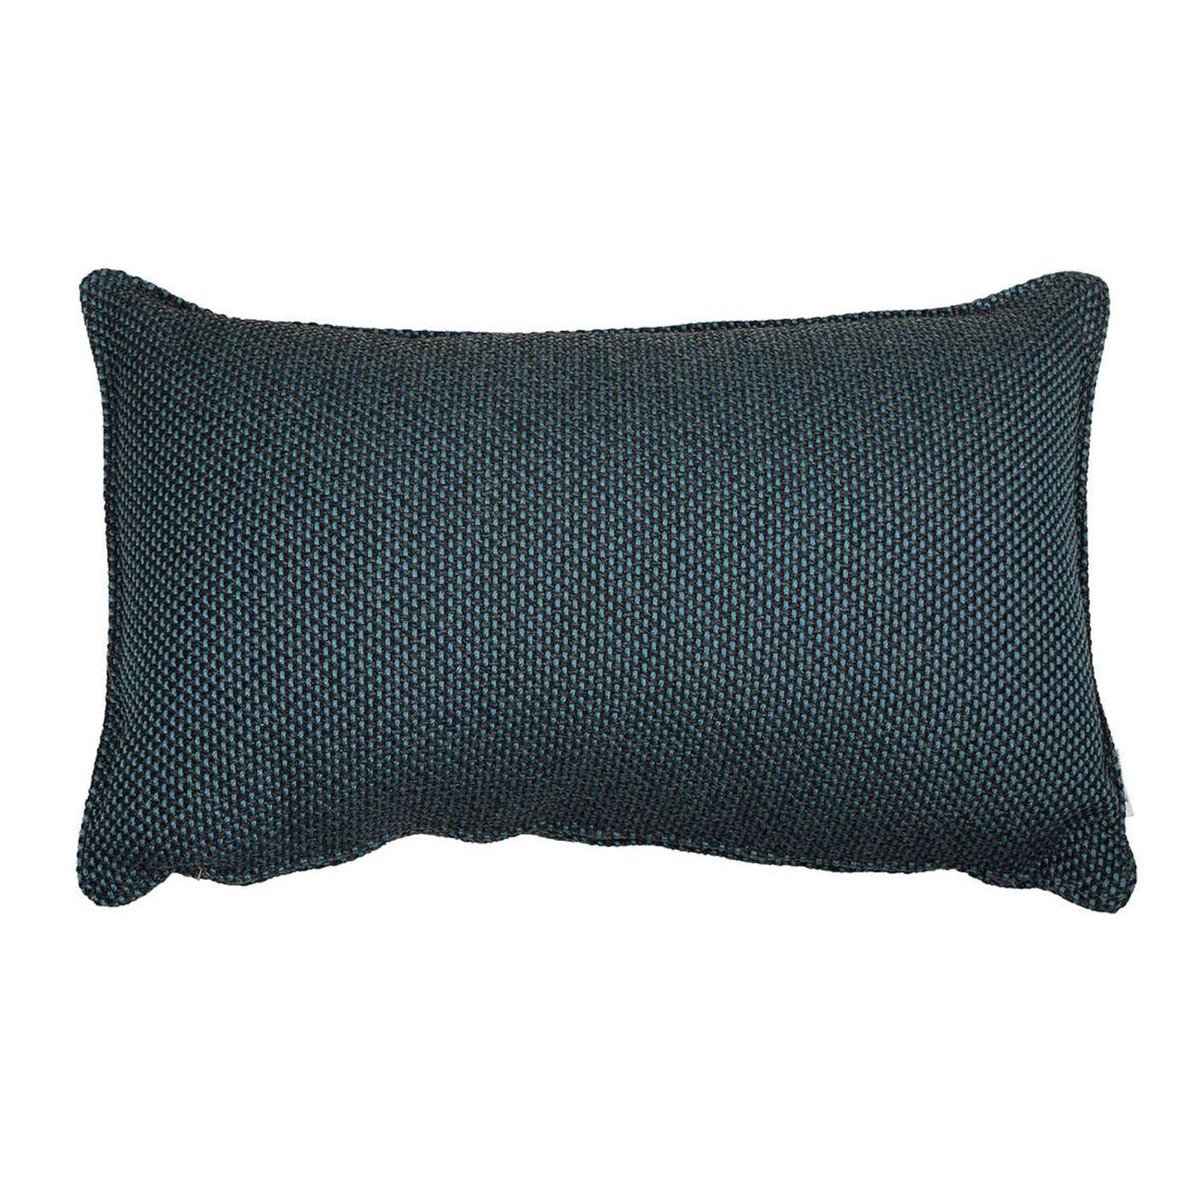 Cane Line Focus Scatter Cushion 52x32x12cm, Square, Blue | Barker & Stonehouse